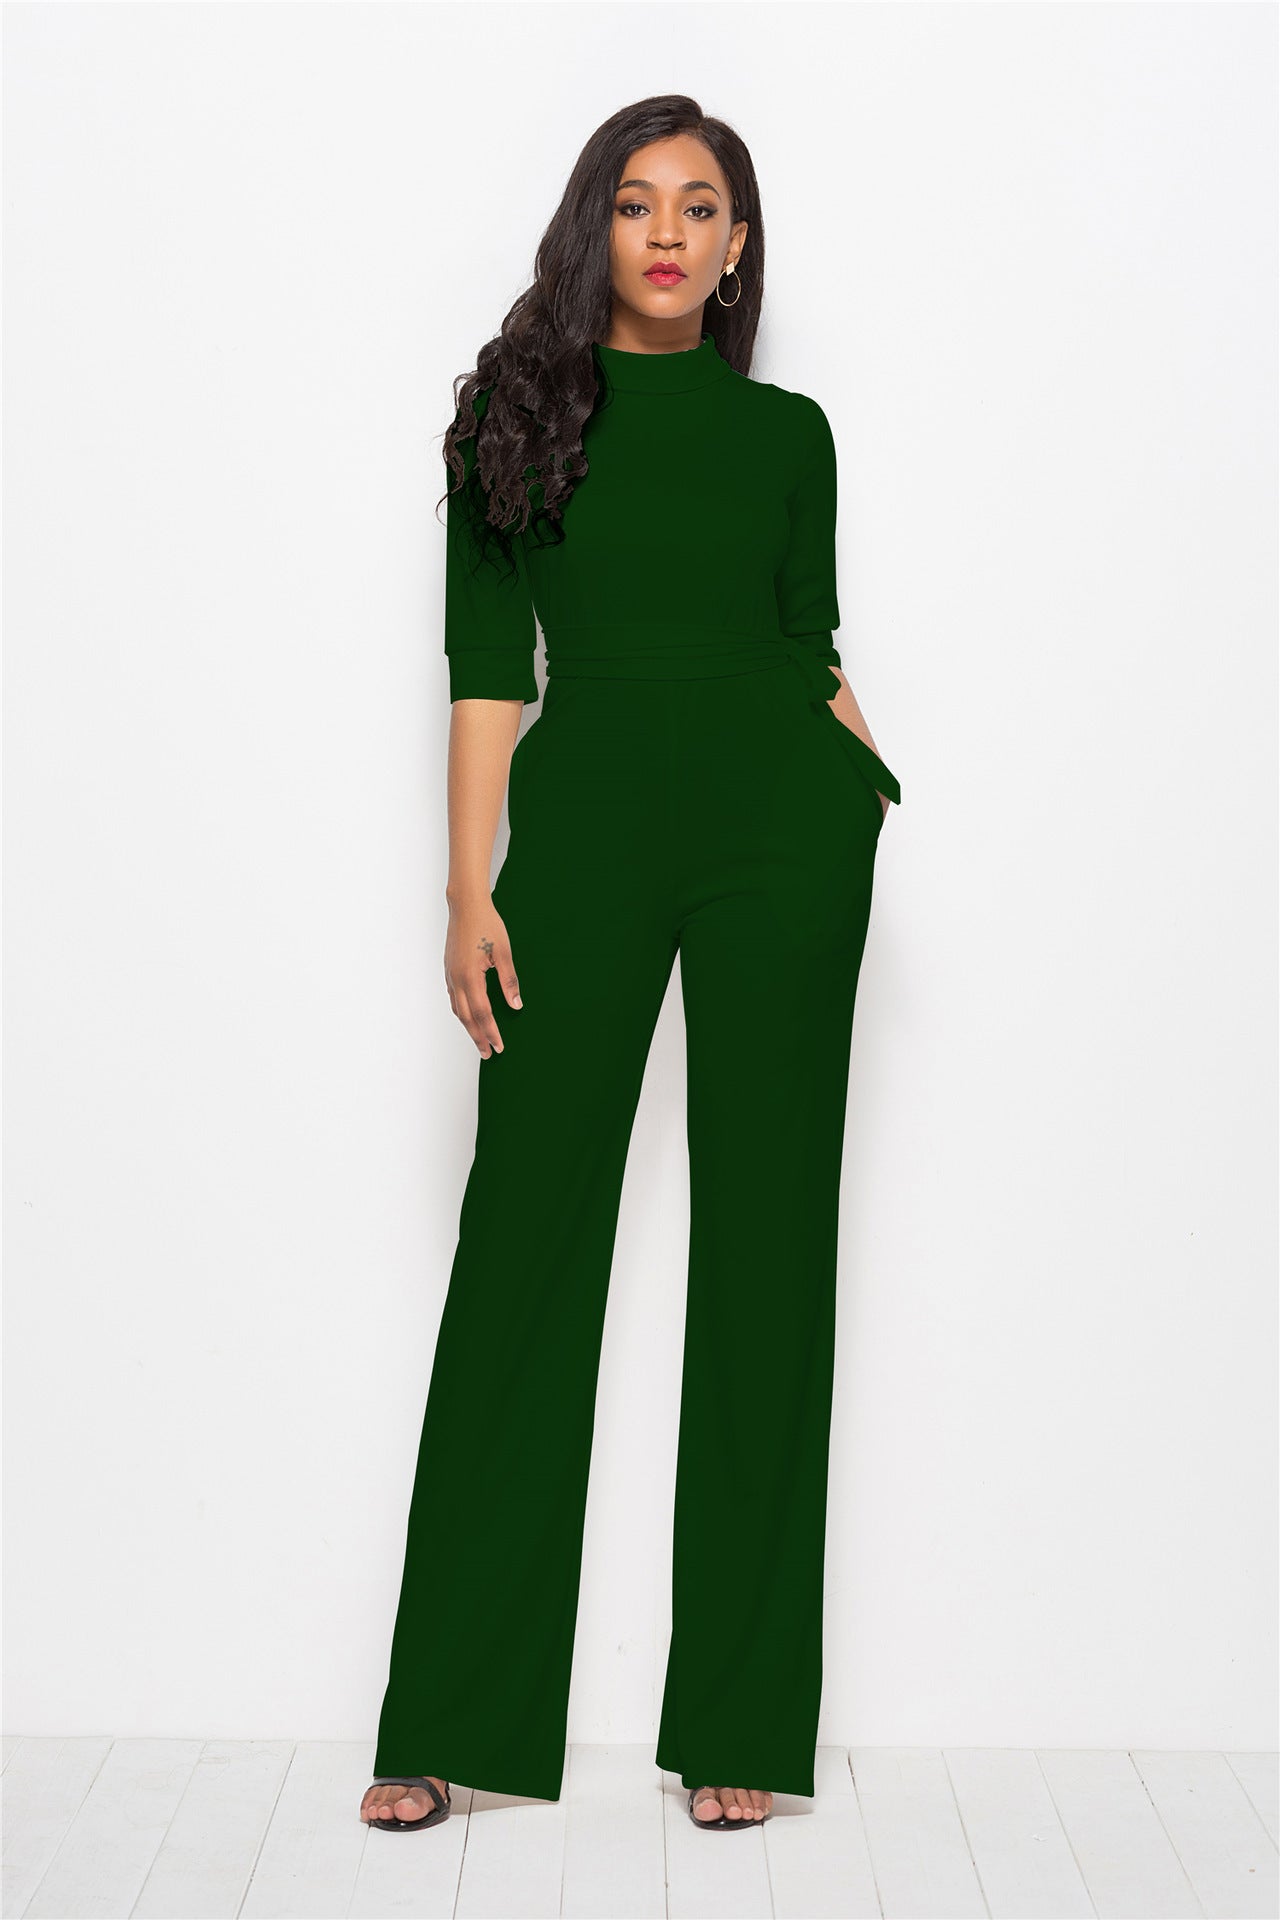 Sexy Fashion Women Fall Jumspuits-Women Suits-Dark Green-S-Free Shipping at meselling99